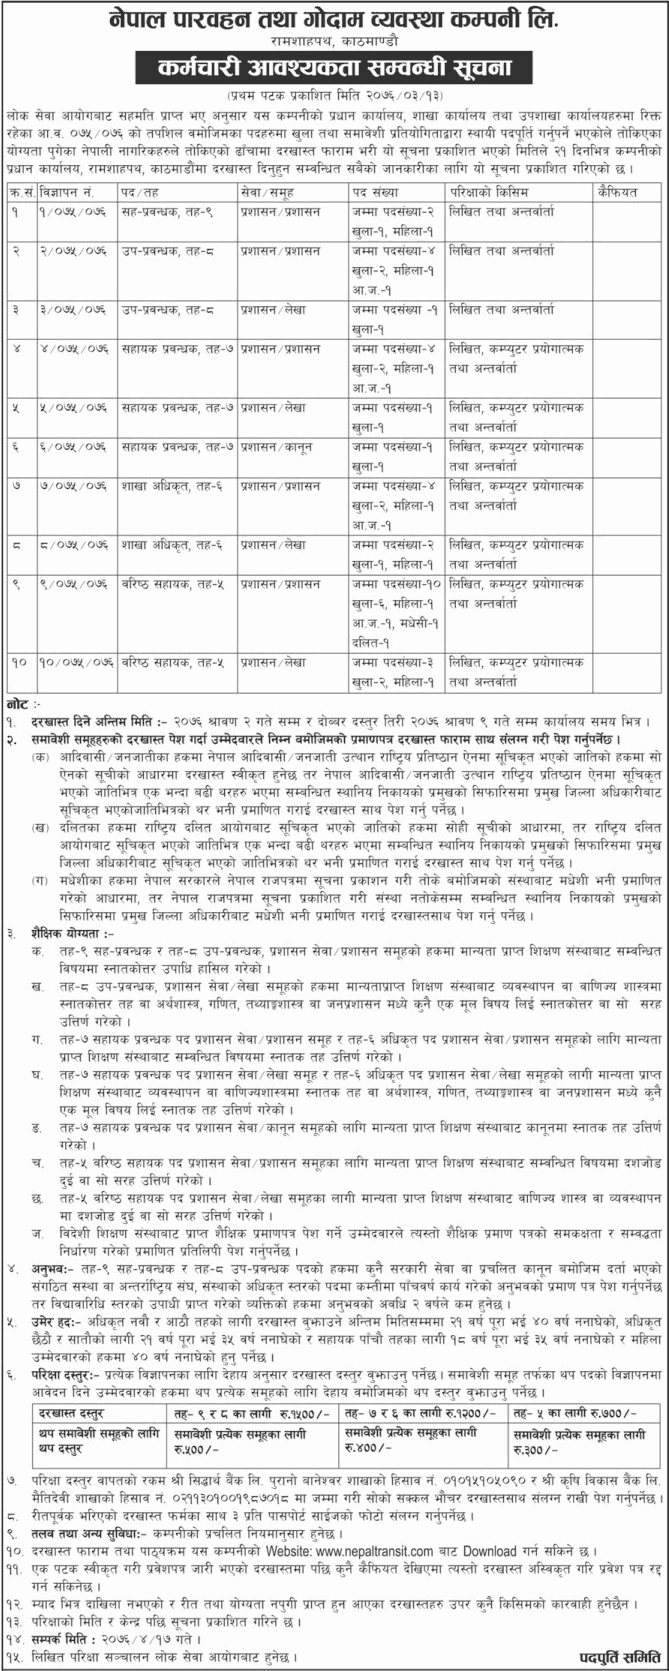 Nepal Transit and Warehousing Company Limited Vacancy